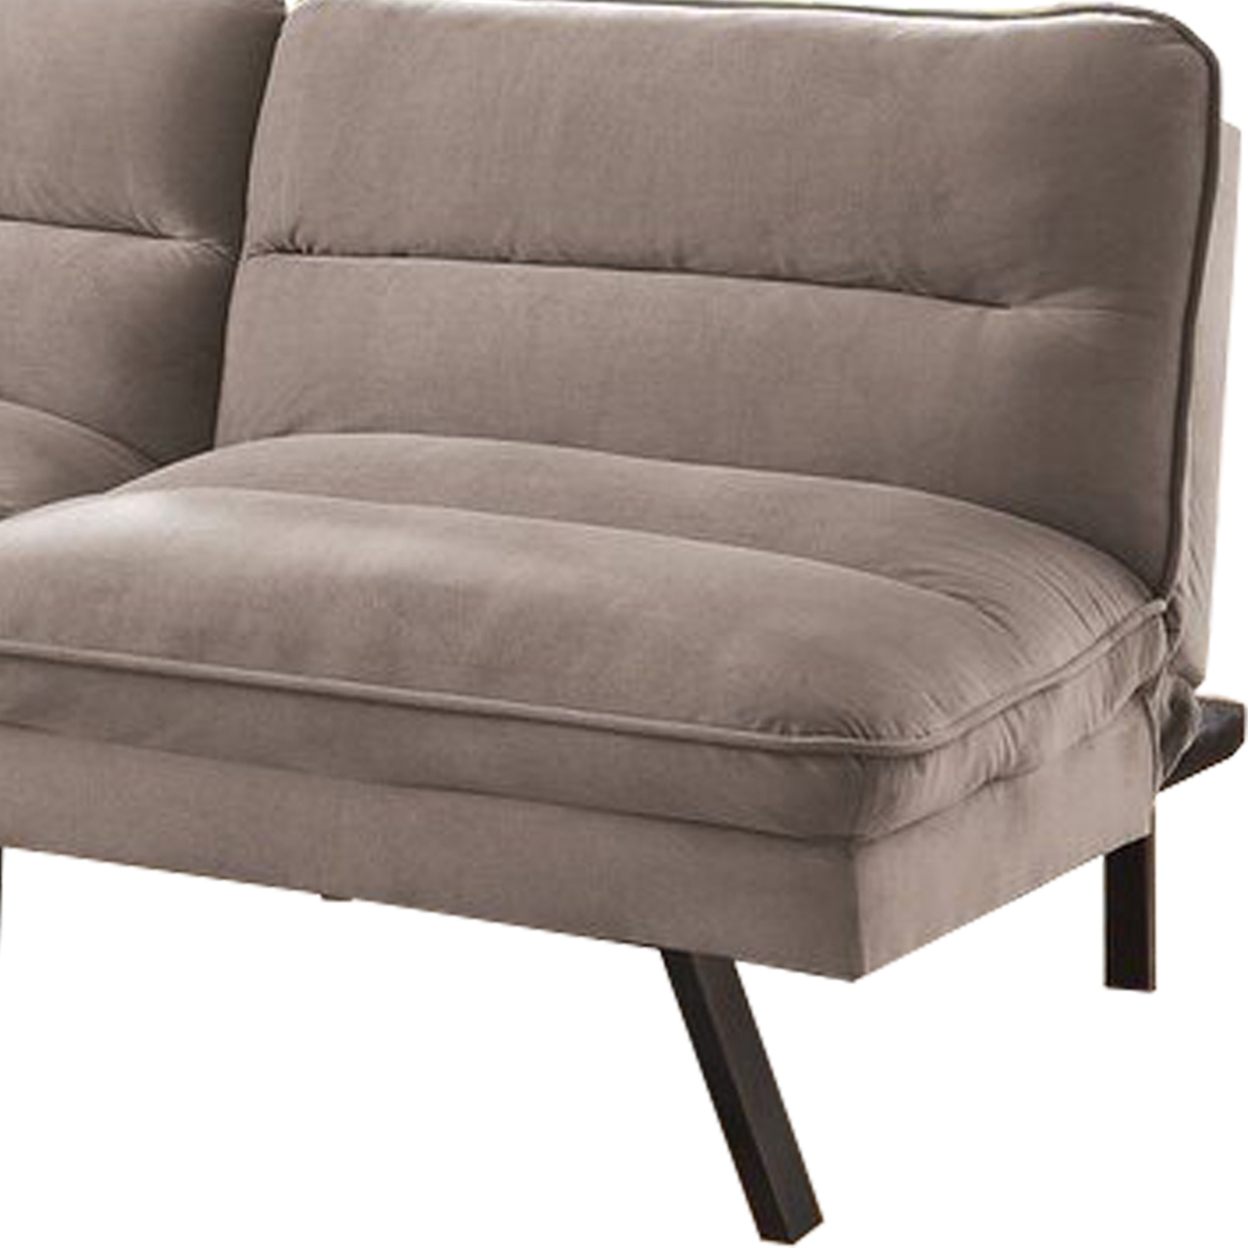 Fabric Futon Sofa With Split Back And Angled Legs, Gray- Saltoro Sherpi